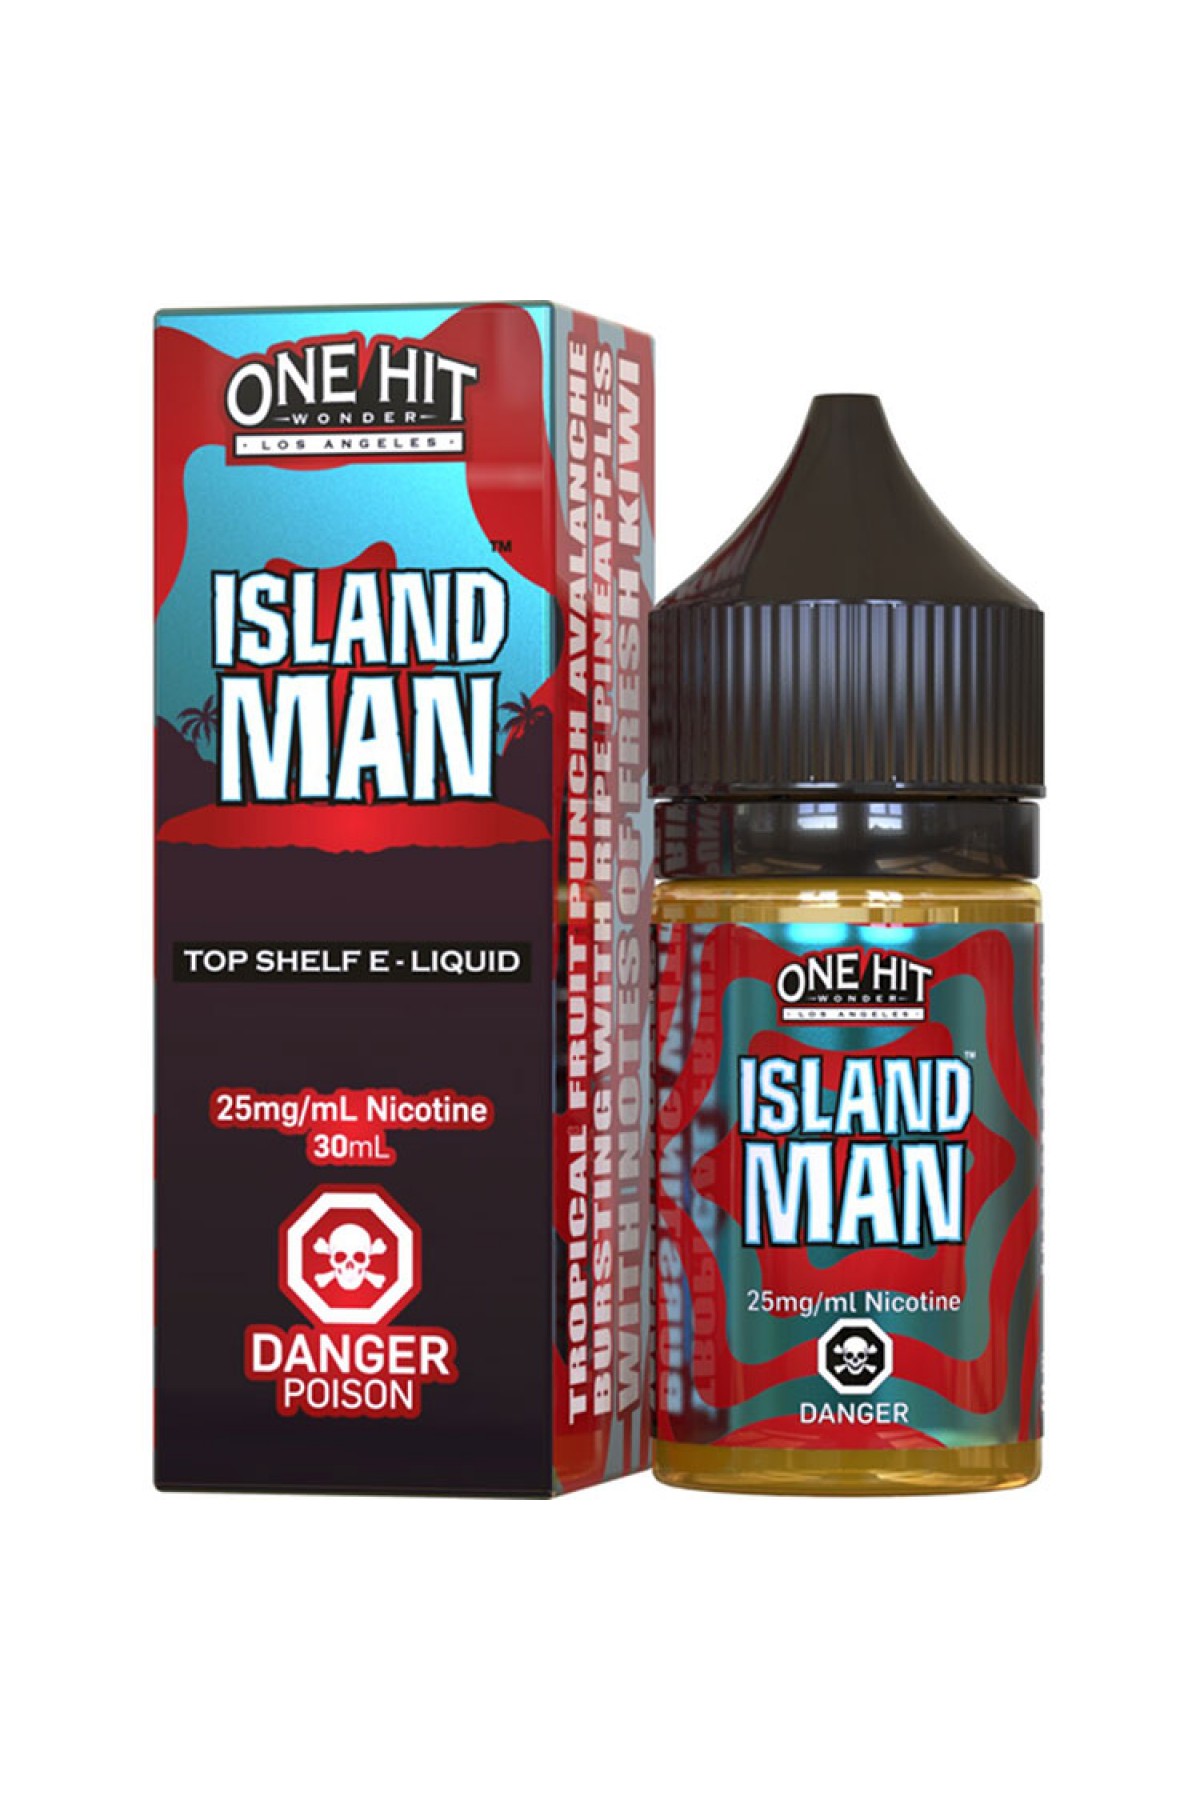 One Hit Wonder Island Man Premium Salt Likit (30ml)